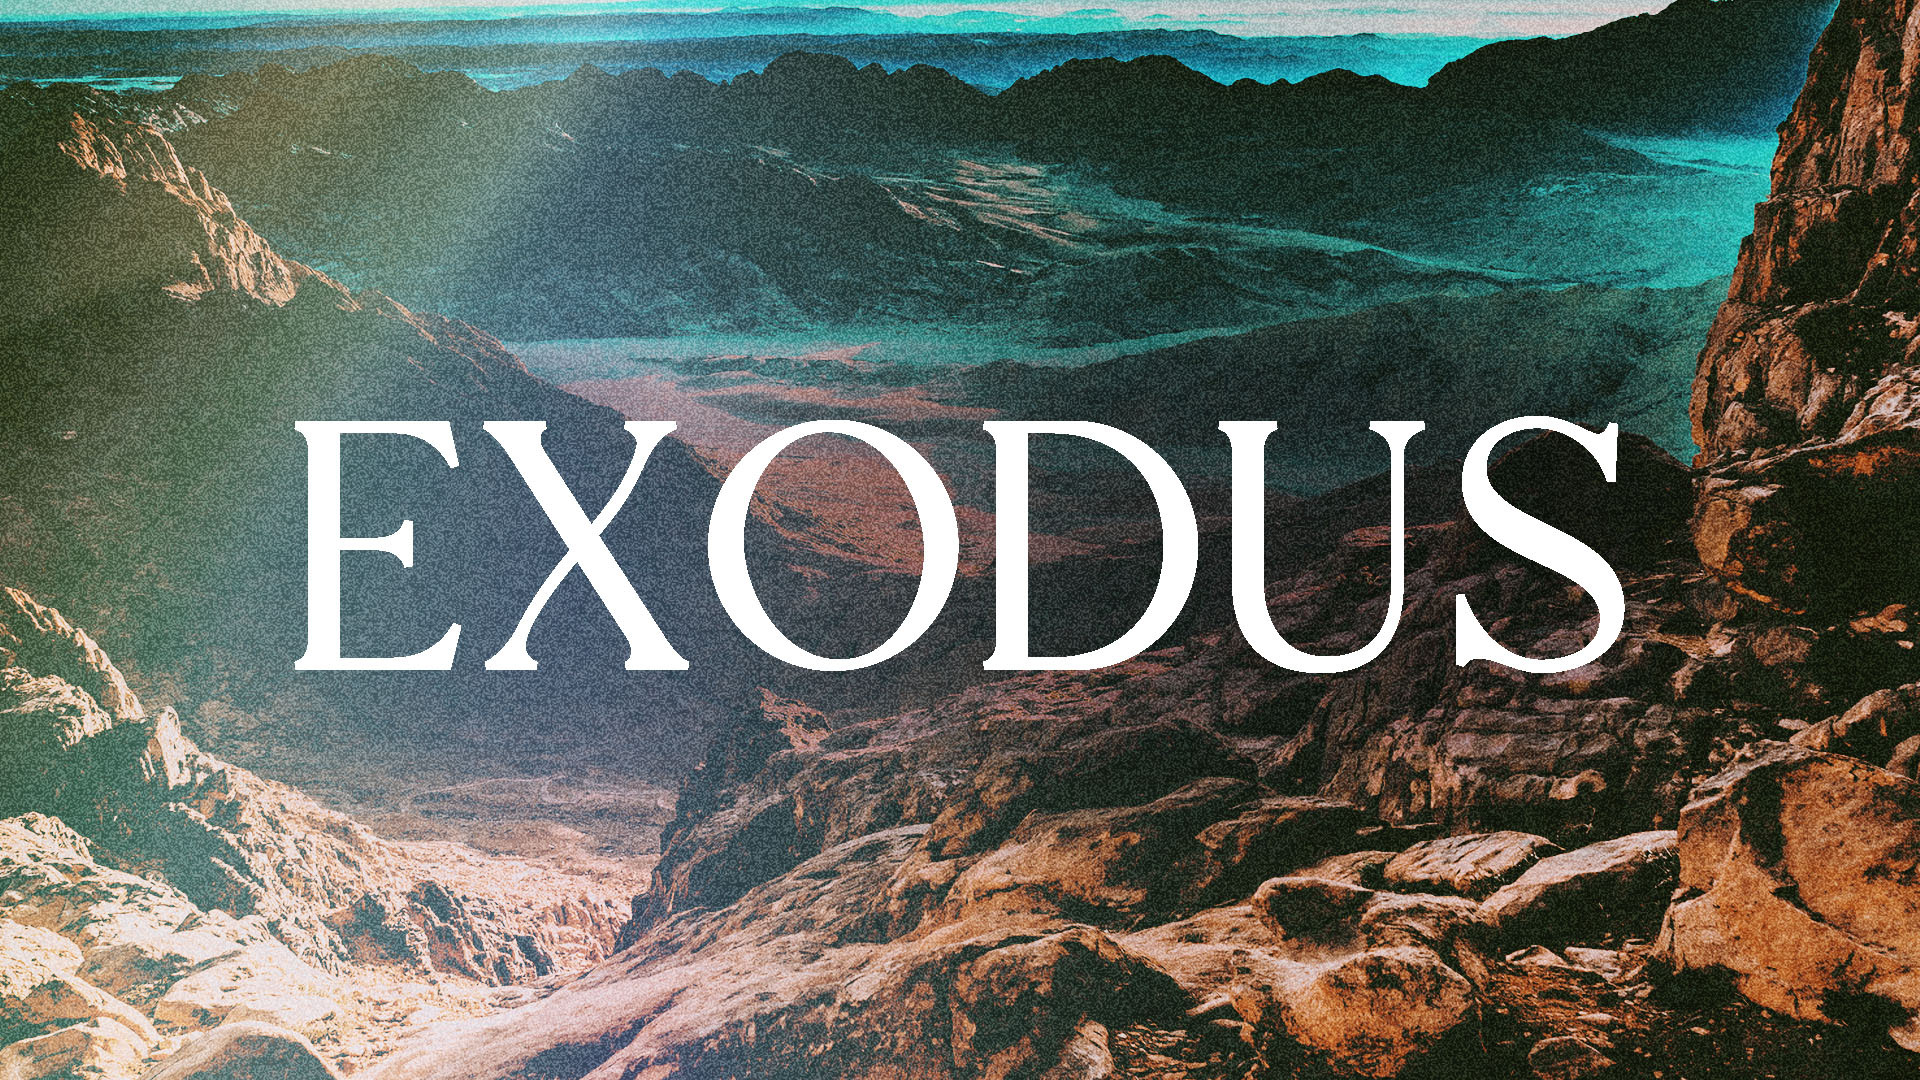 Exodus title 1 Wide 16x9